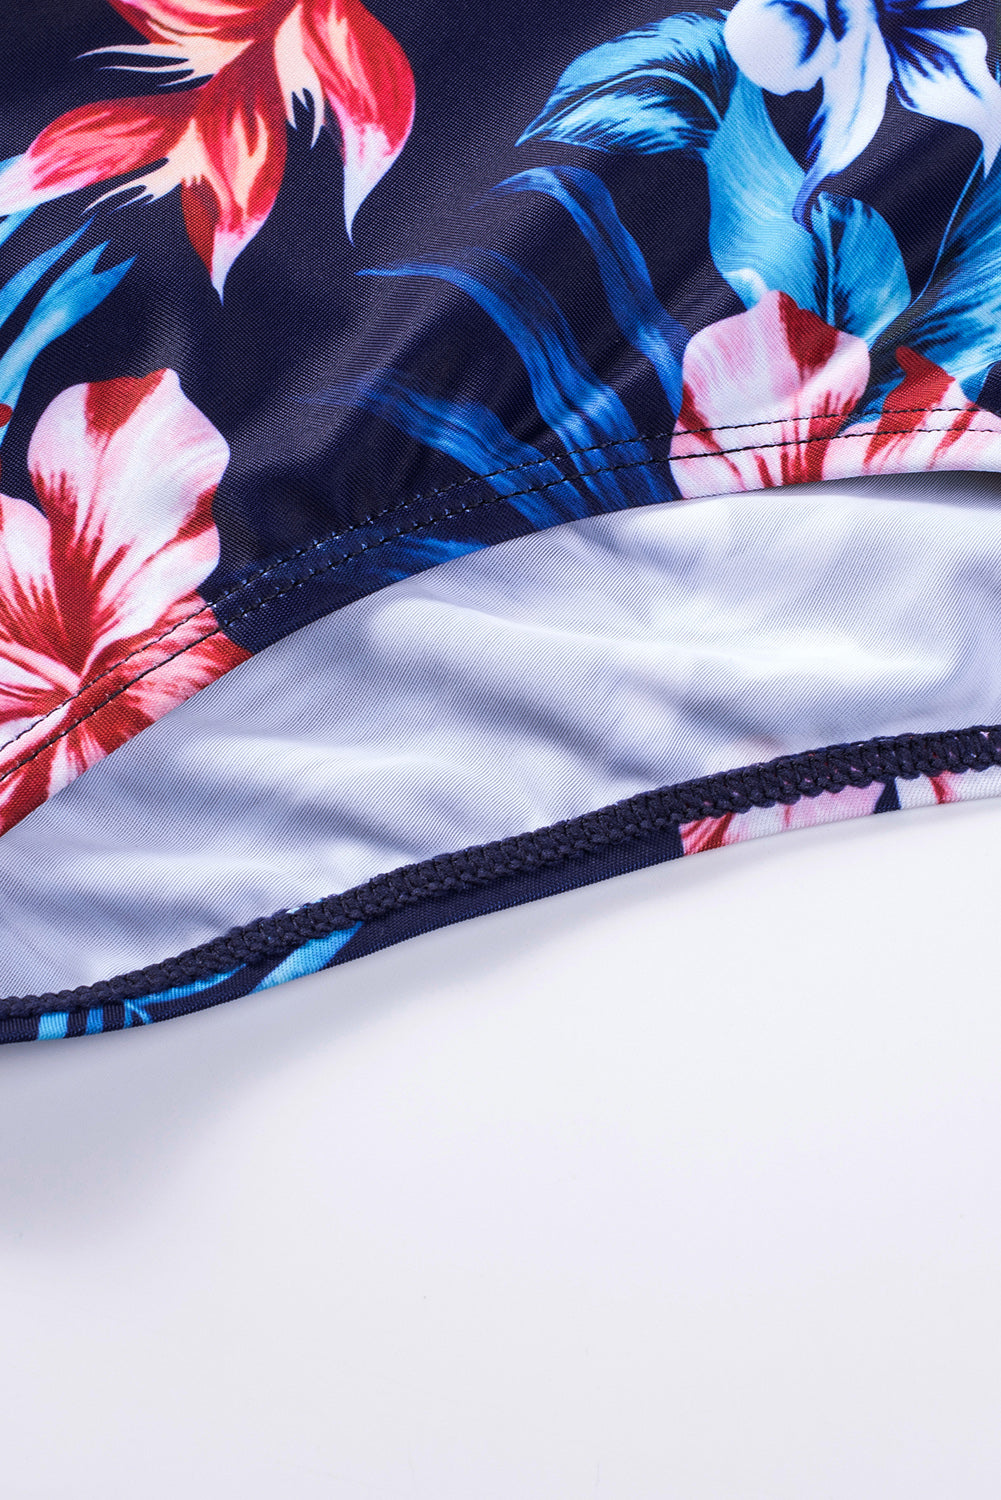 Black Floral Print Mesh Patchwork Criss Cross One Piece Swimsuit